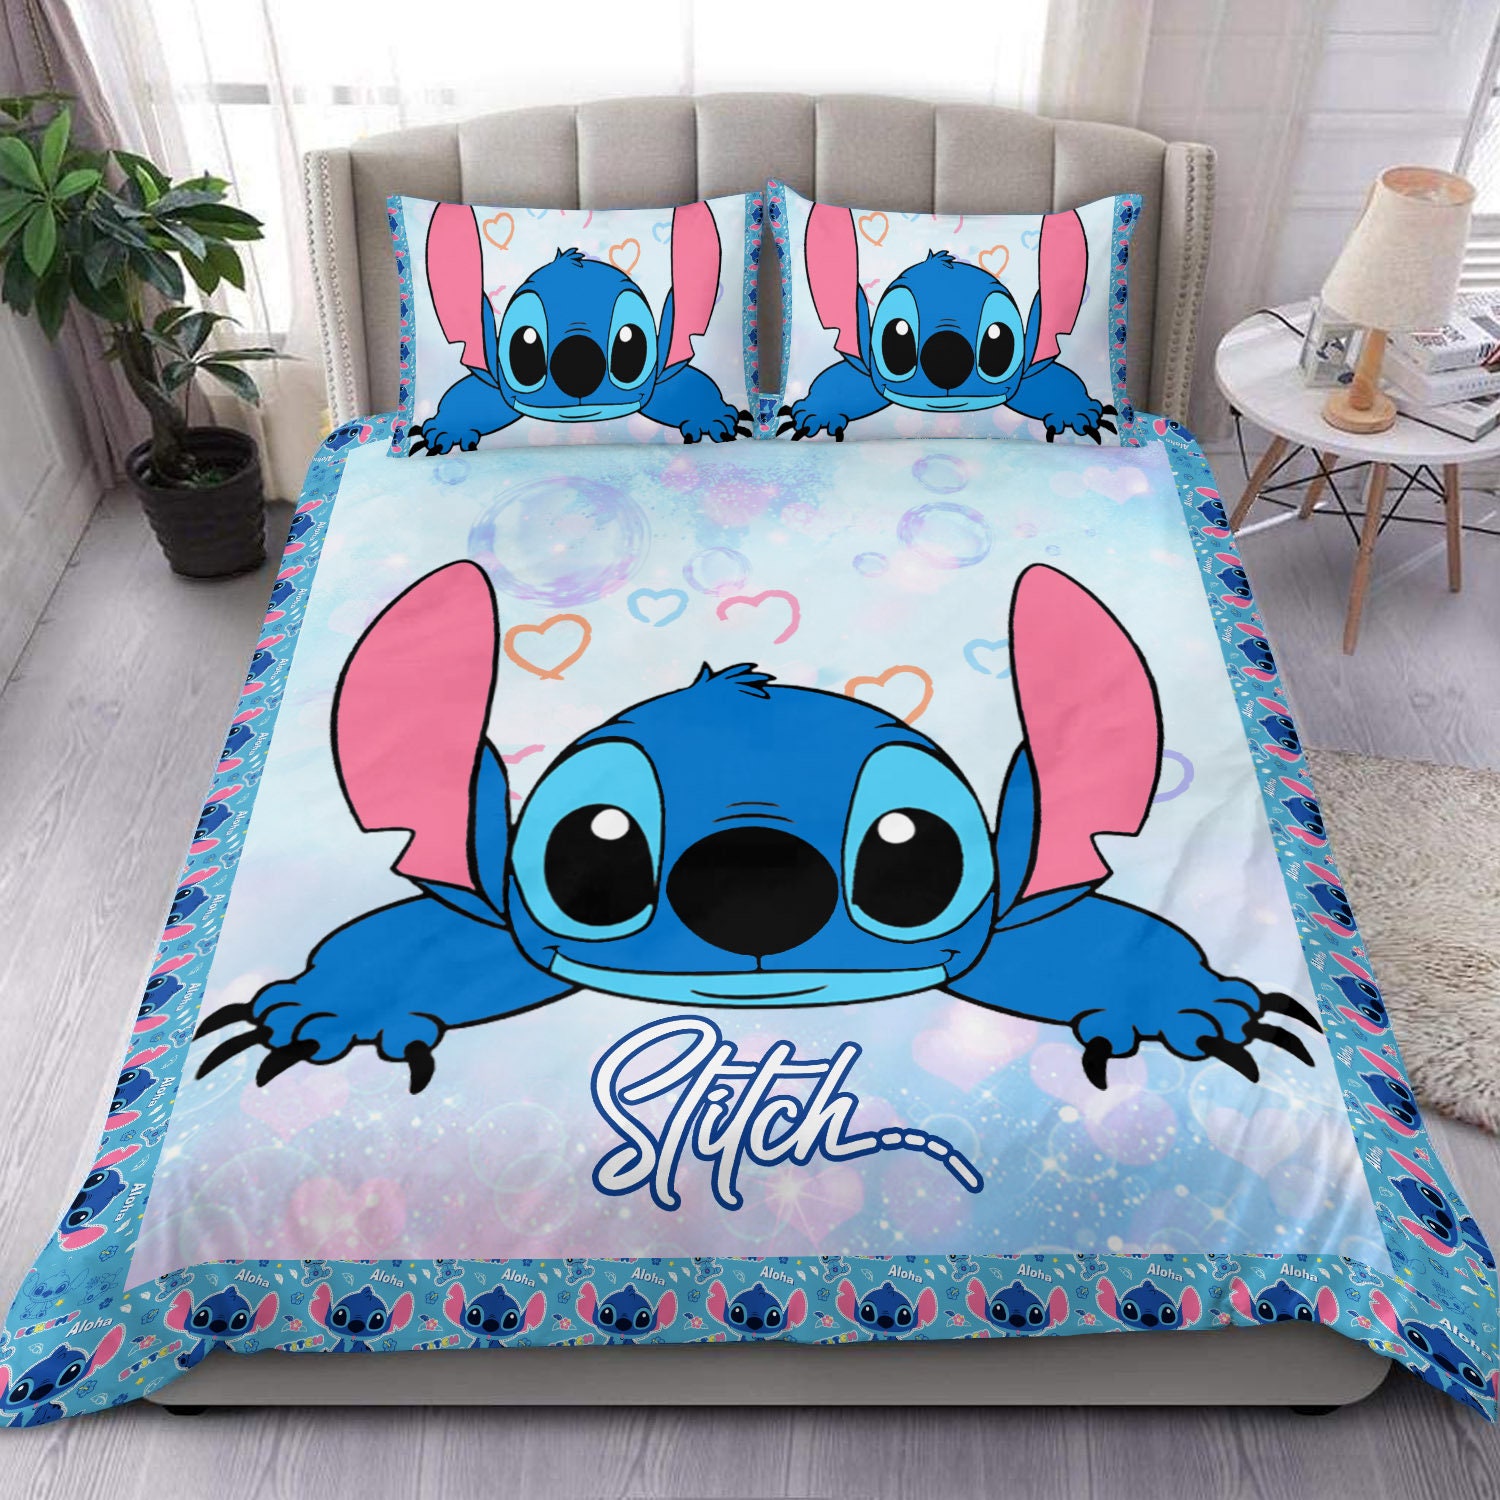 Blue Stich Cute Bedding Set Disney Graphic Cartoon